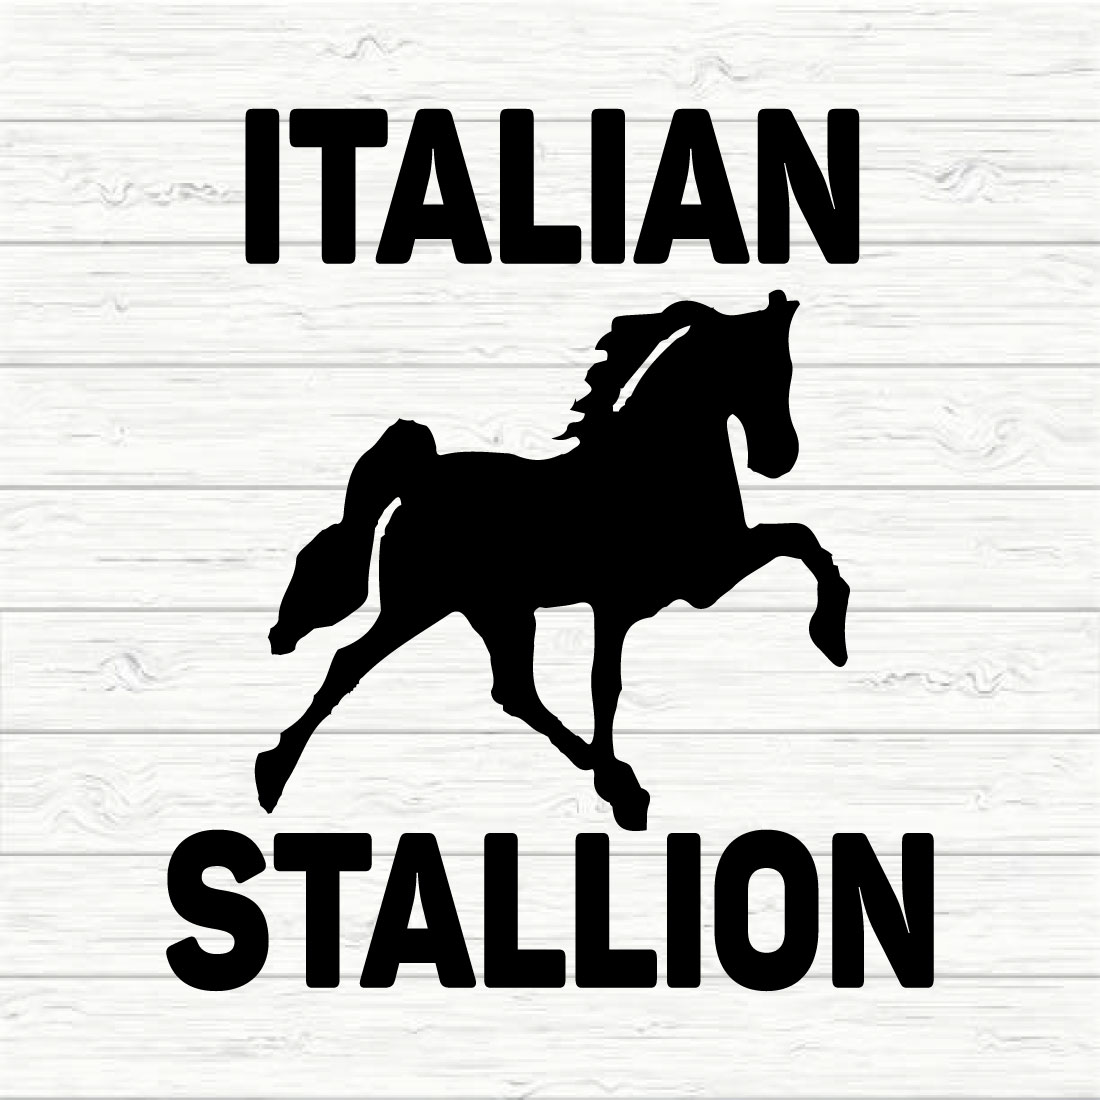 Italian stallion preview image.